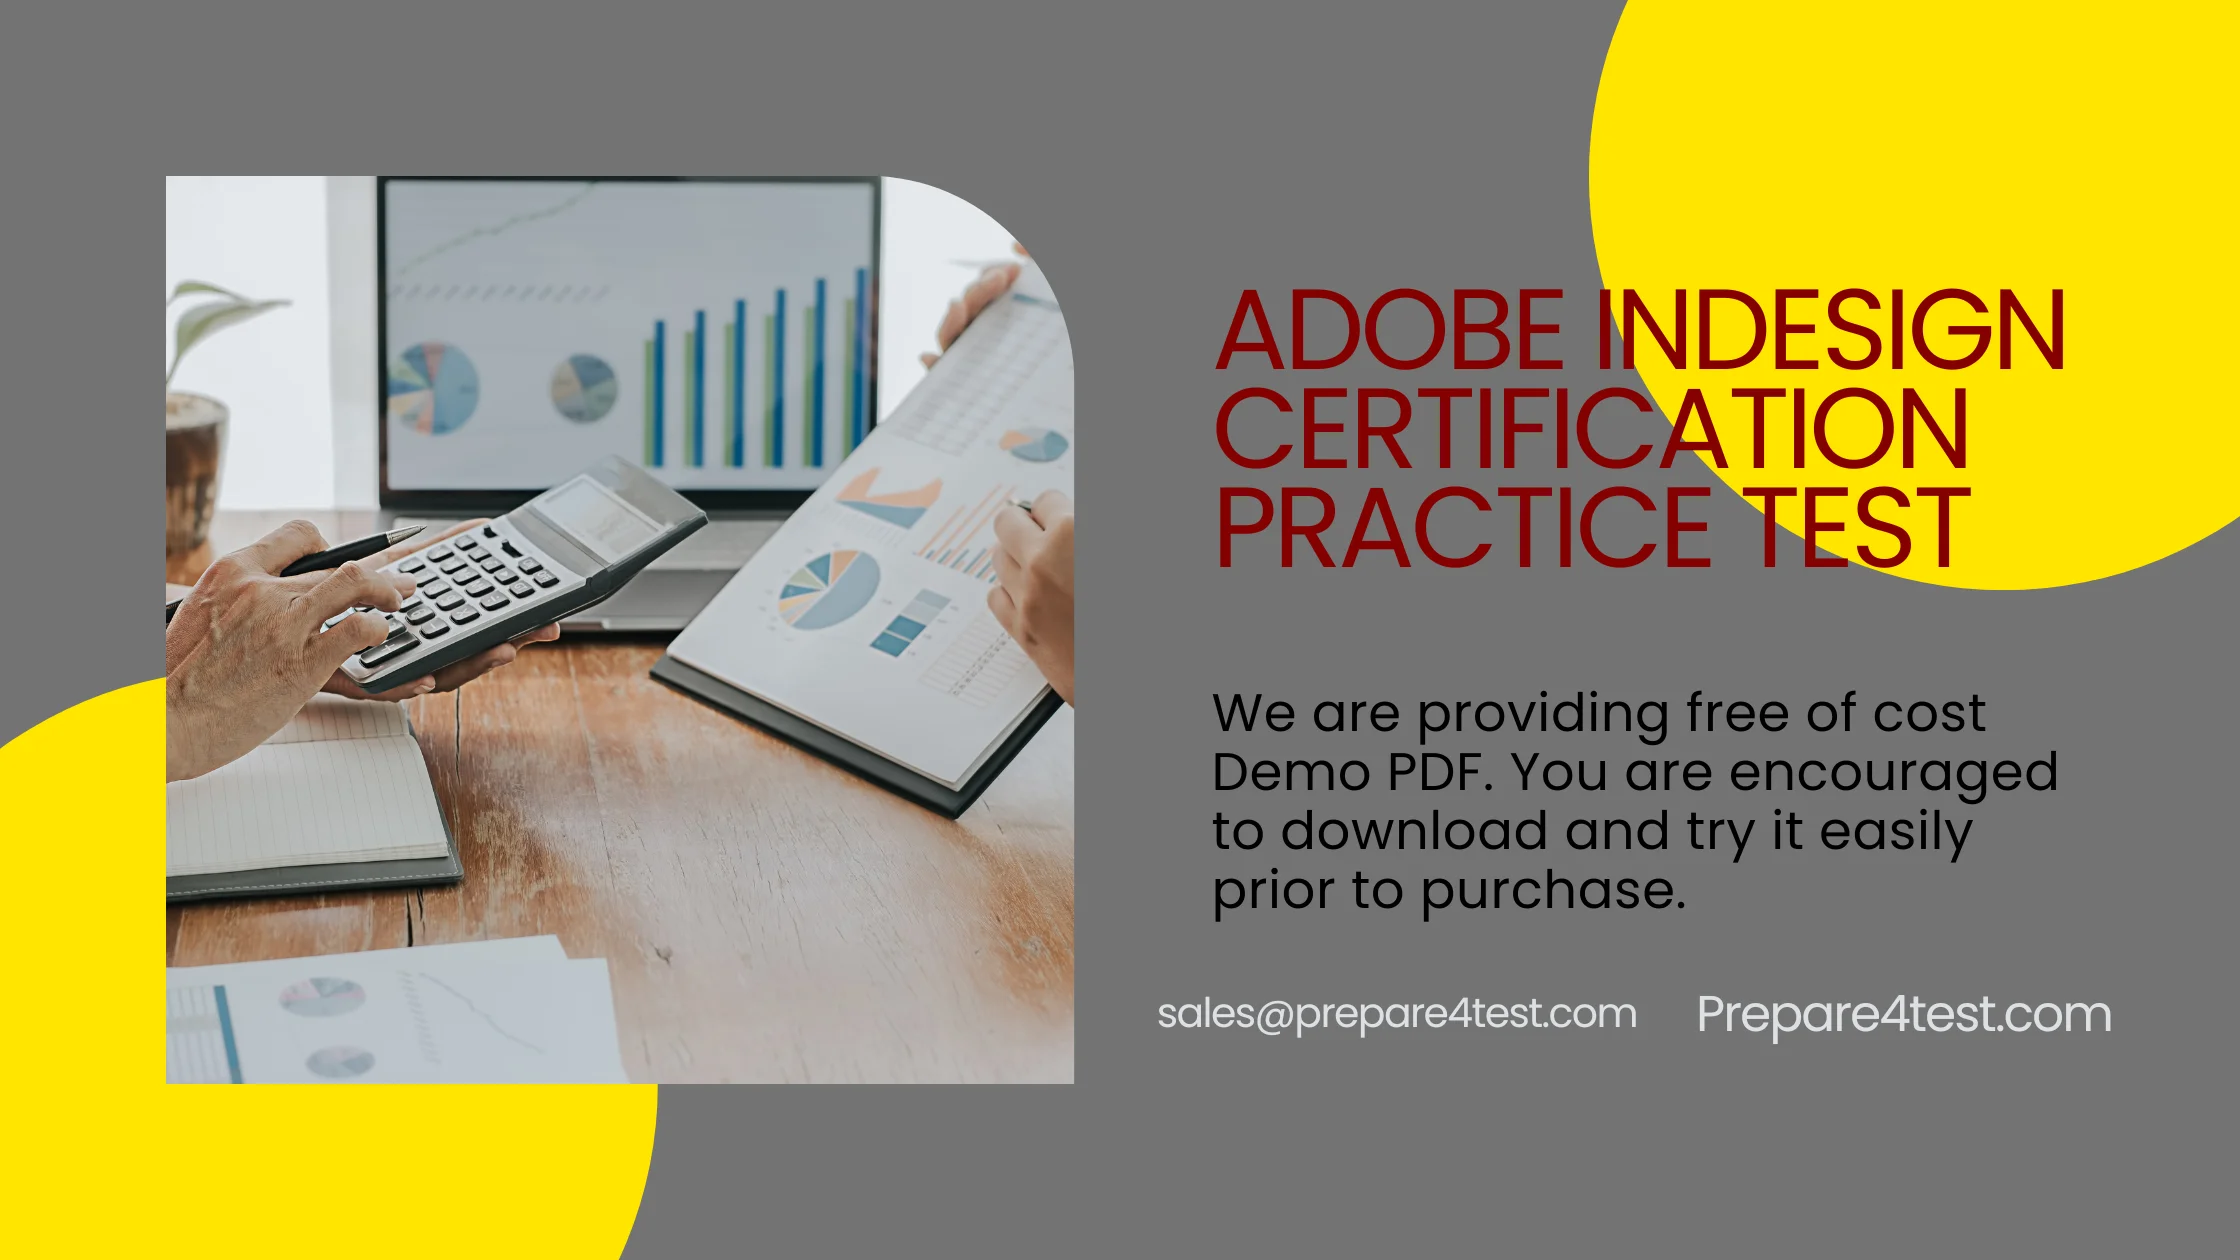 Adobe Indesign Certification Practice Test promotion